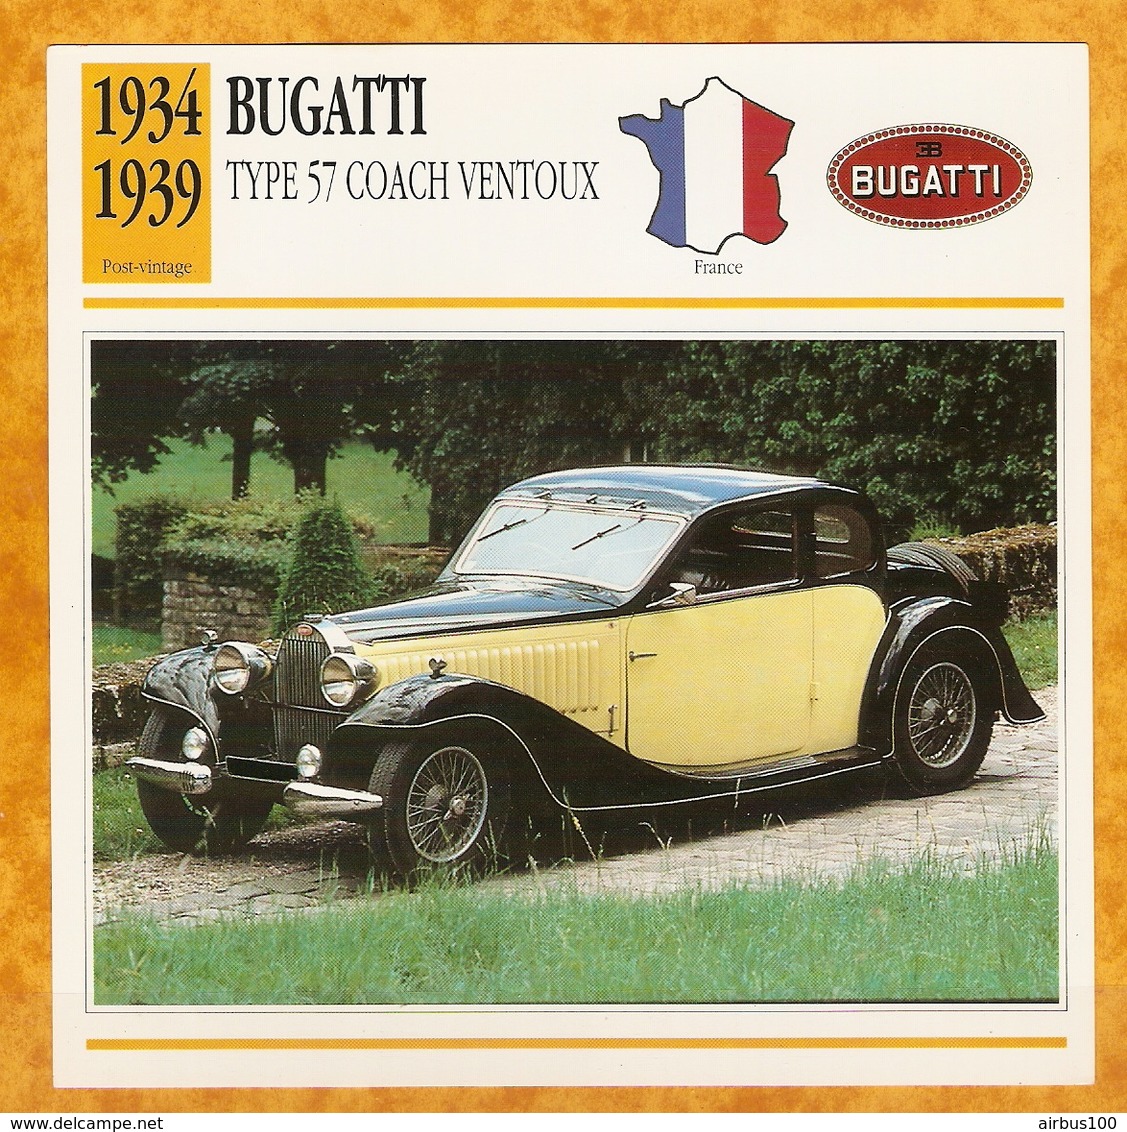 1934 FRANCE VIEILLE VOITURE BUGATTI TYPE 57 COACH VENTOUX - FRANCE OLD CAR - FRANCIA VIEJO COCHE - VECCHIA MACCHINA - Voitures